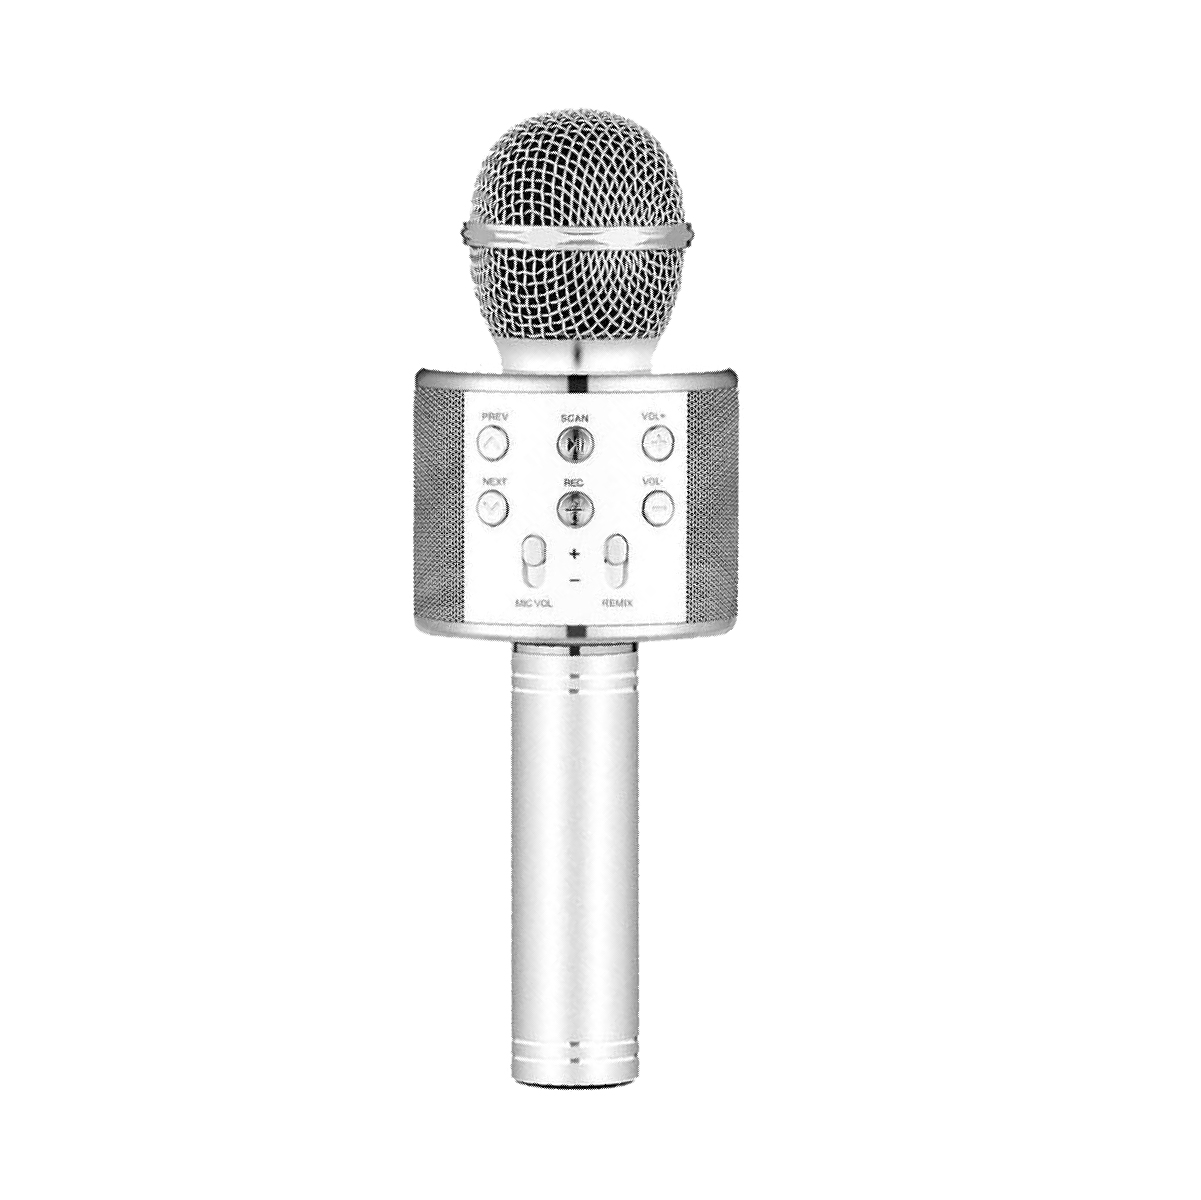 Pronex Bluetooth Karaoke Microphone With Hi-Fi Speaker, Rose Gold / Silver, WS-858